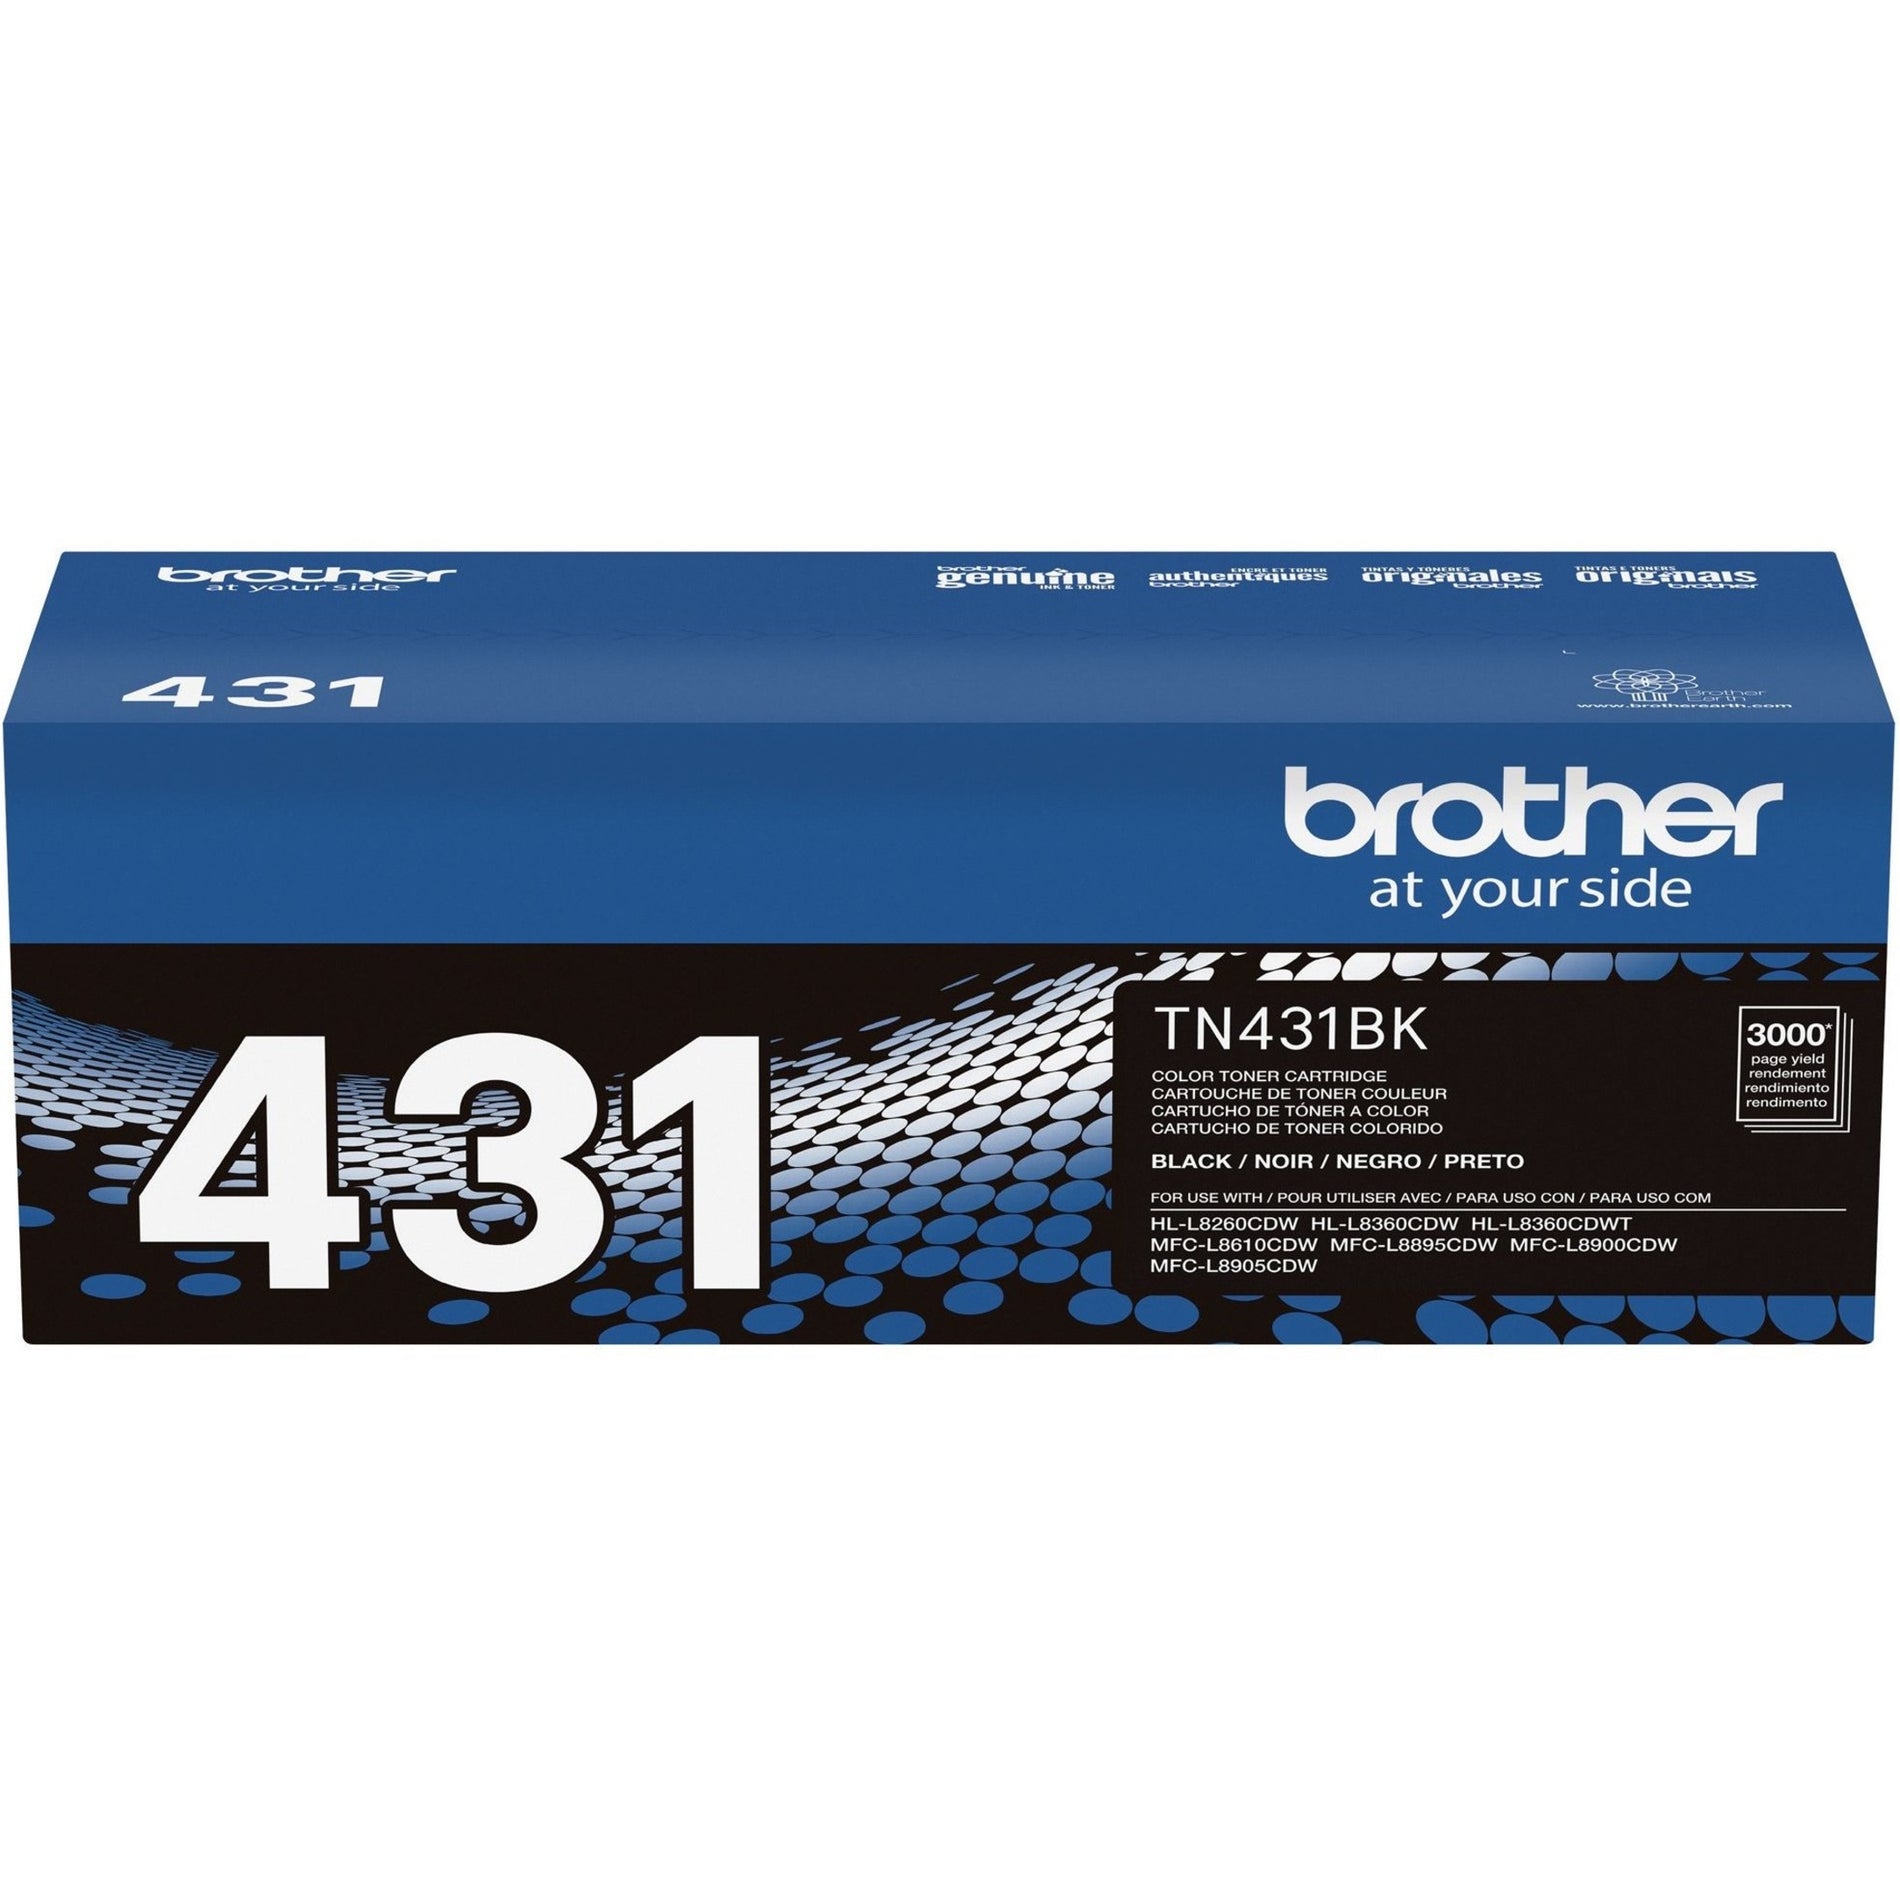 Brother TN431BK Toner Cartridge, 3000 Page Standard Yield, Black